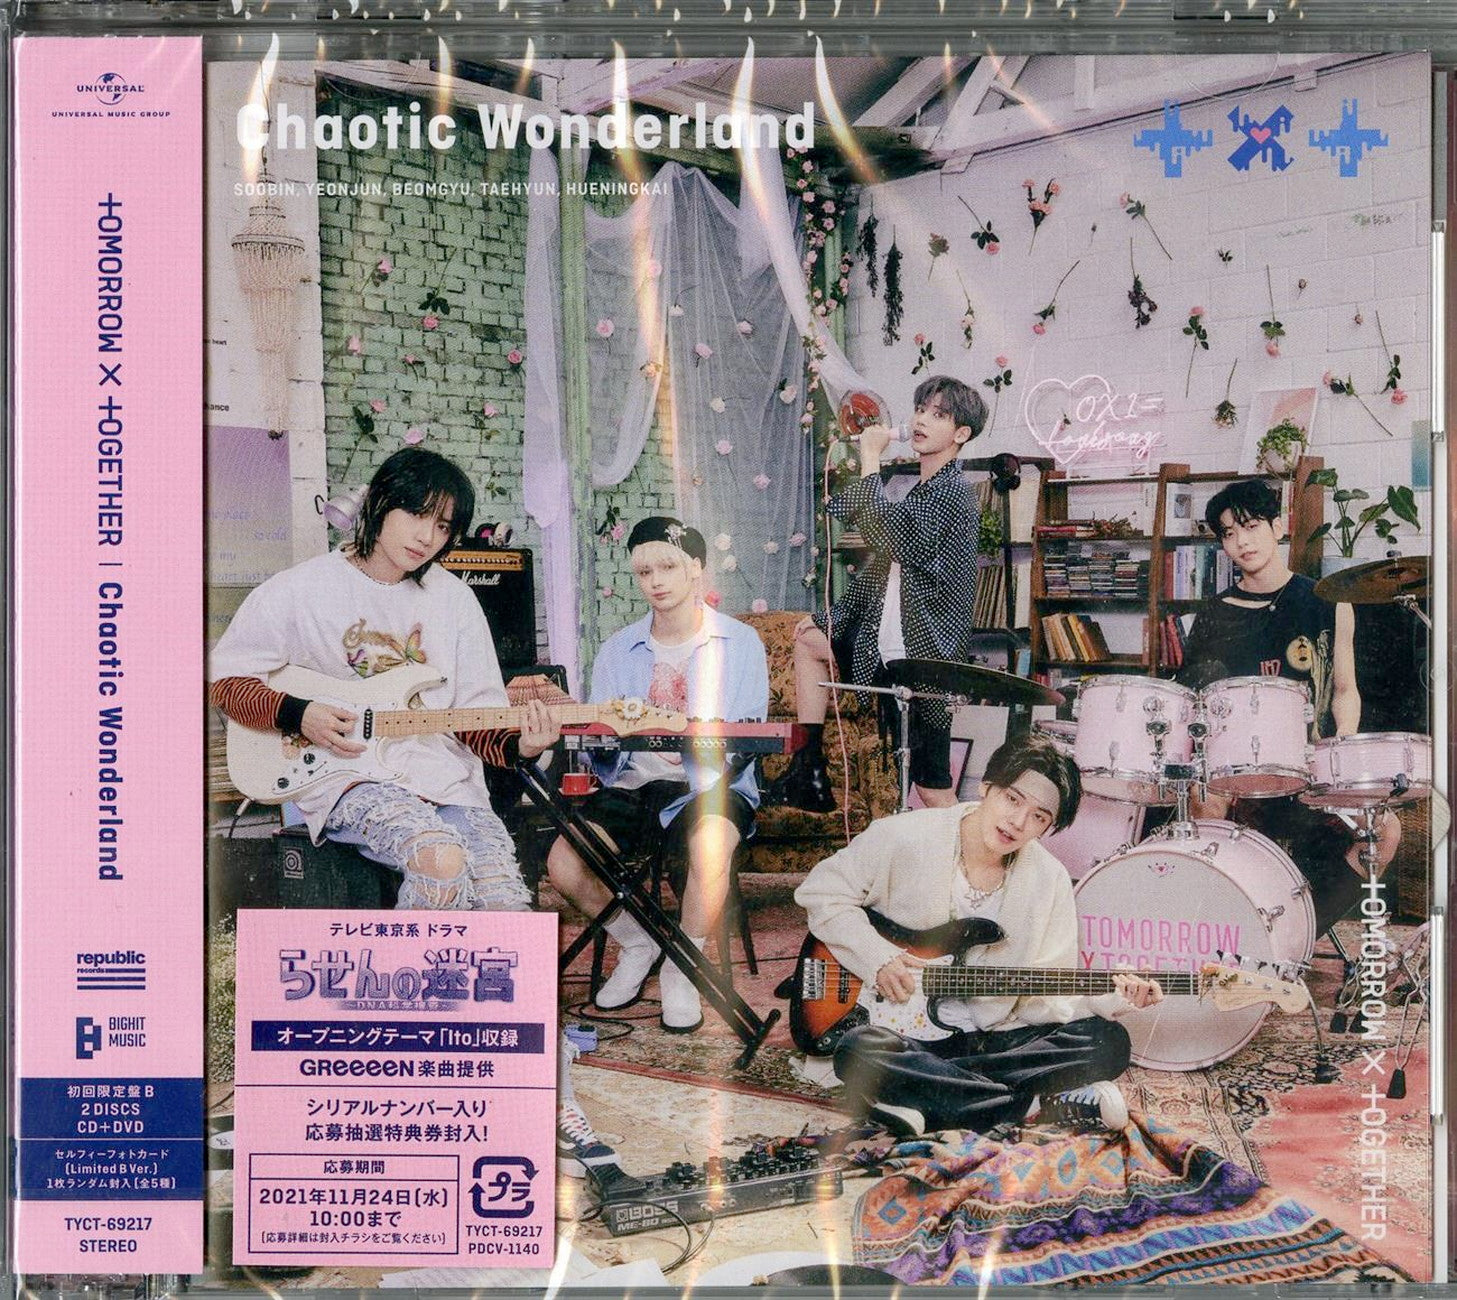 Tomorrow X Together - Chaotic Wonderland (Type-B) - Japan CD+DVD